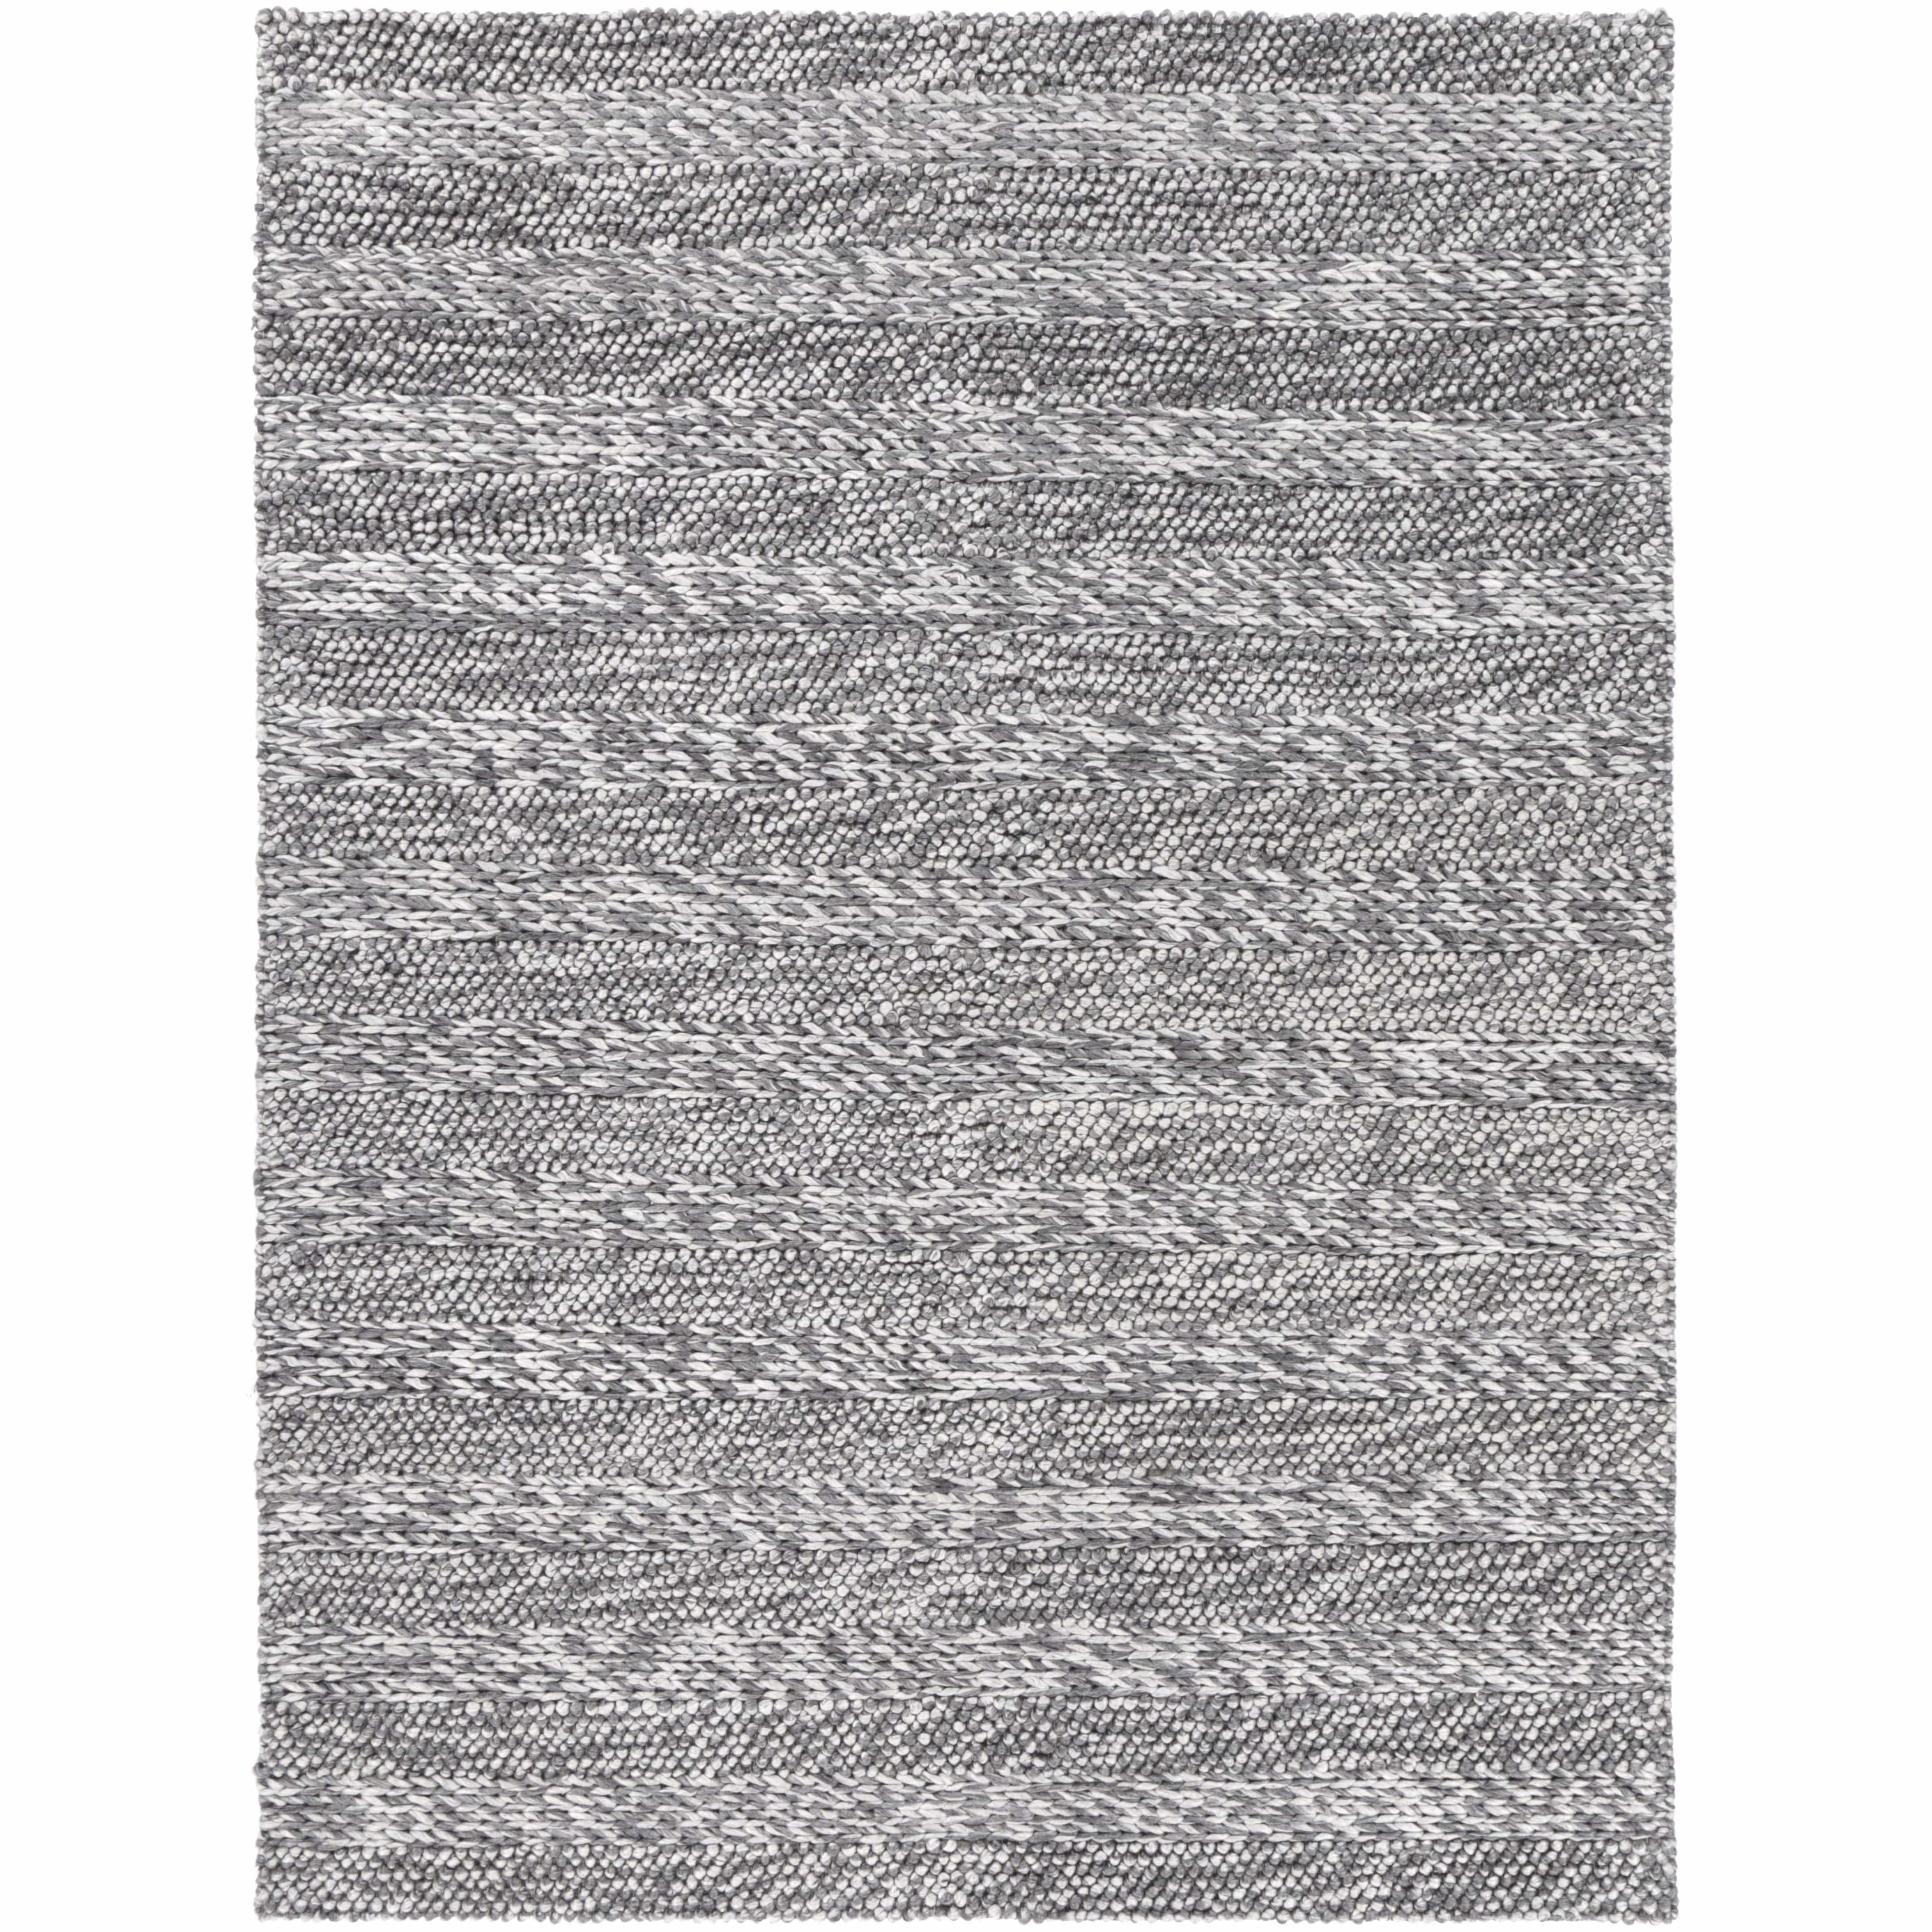 Brand Ventures RUGS 160x230cm Zayna Ringlets Charcoal Wool Blend Rug